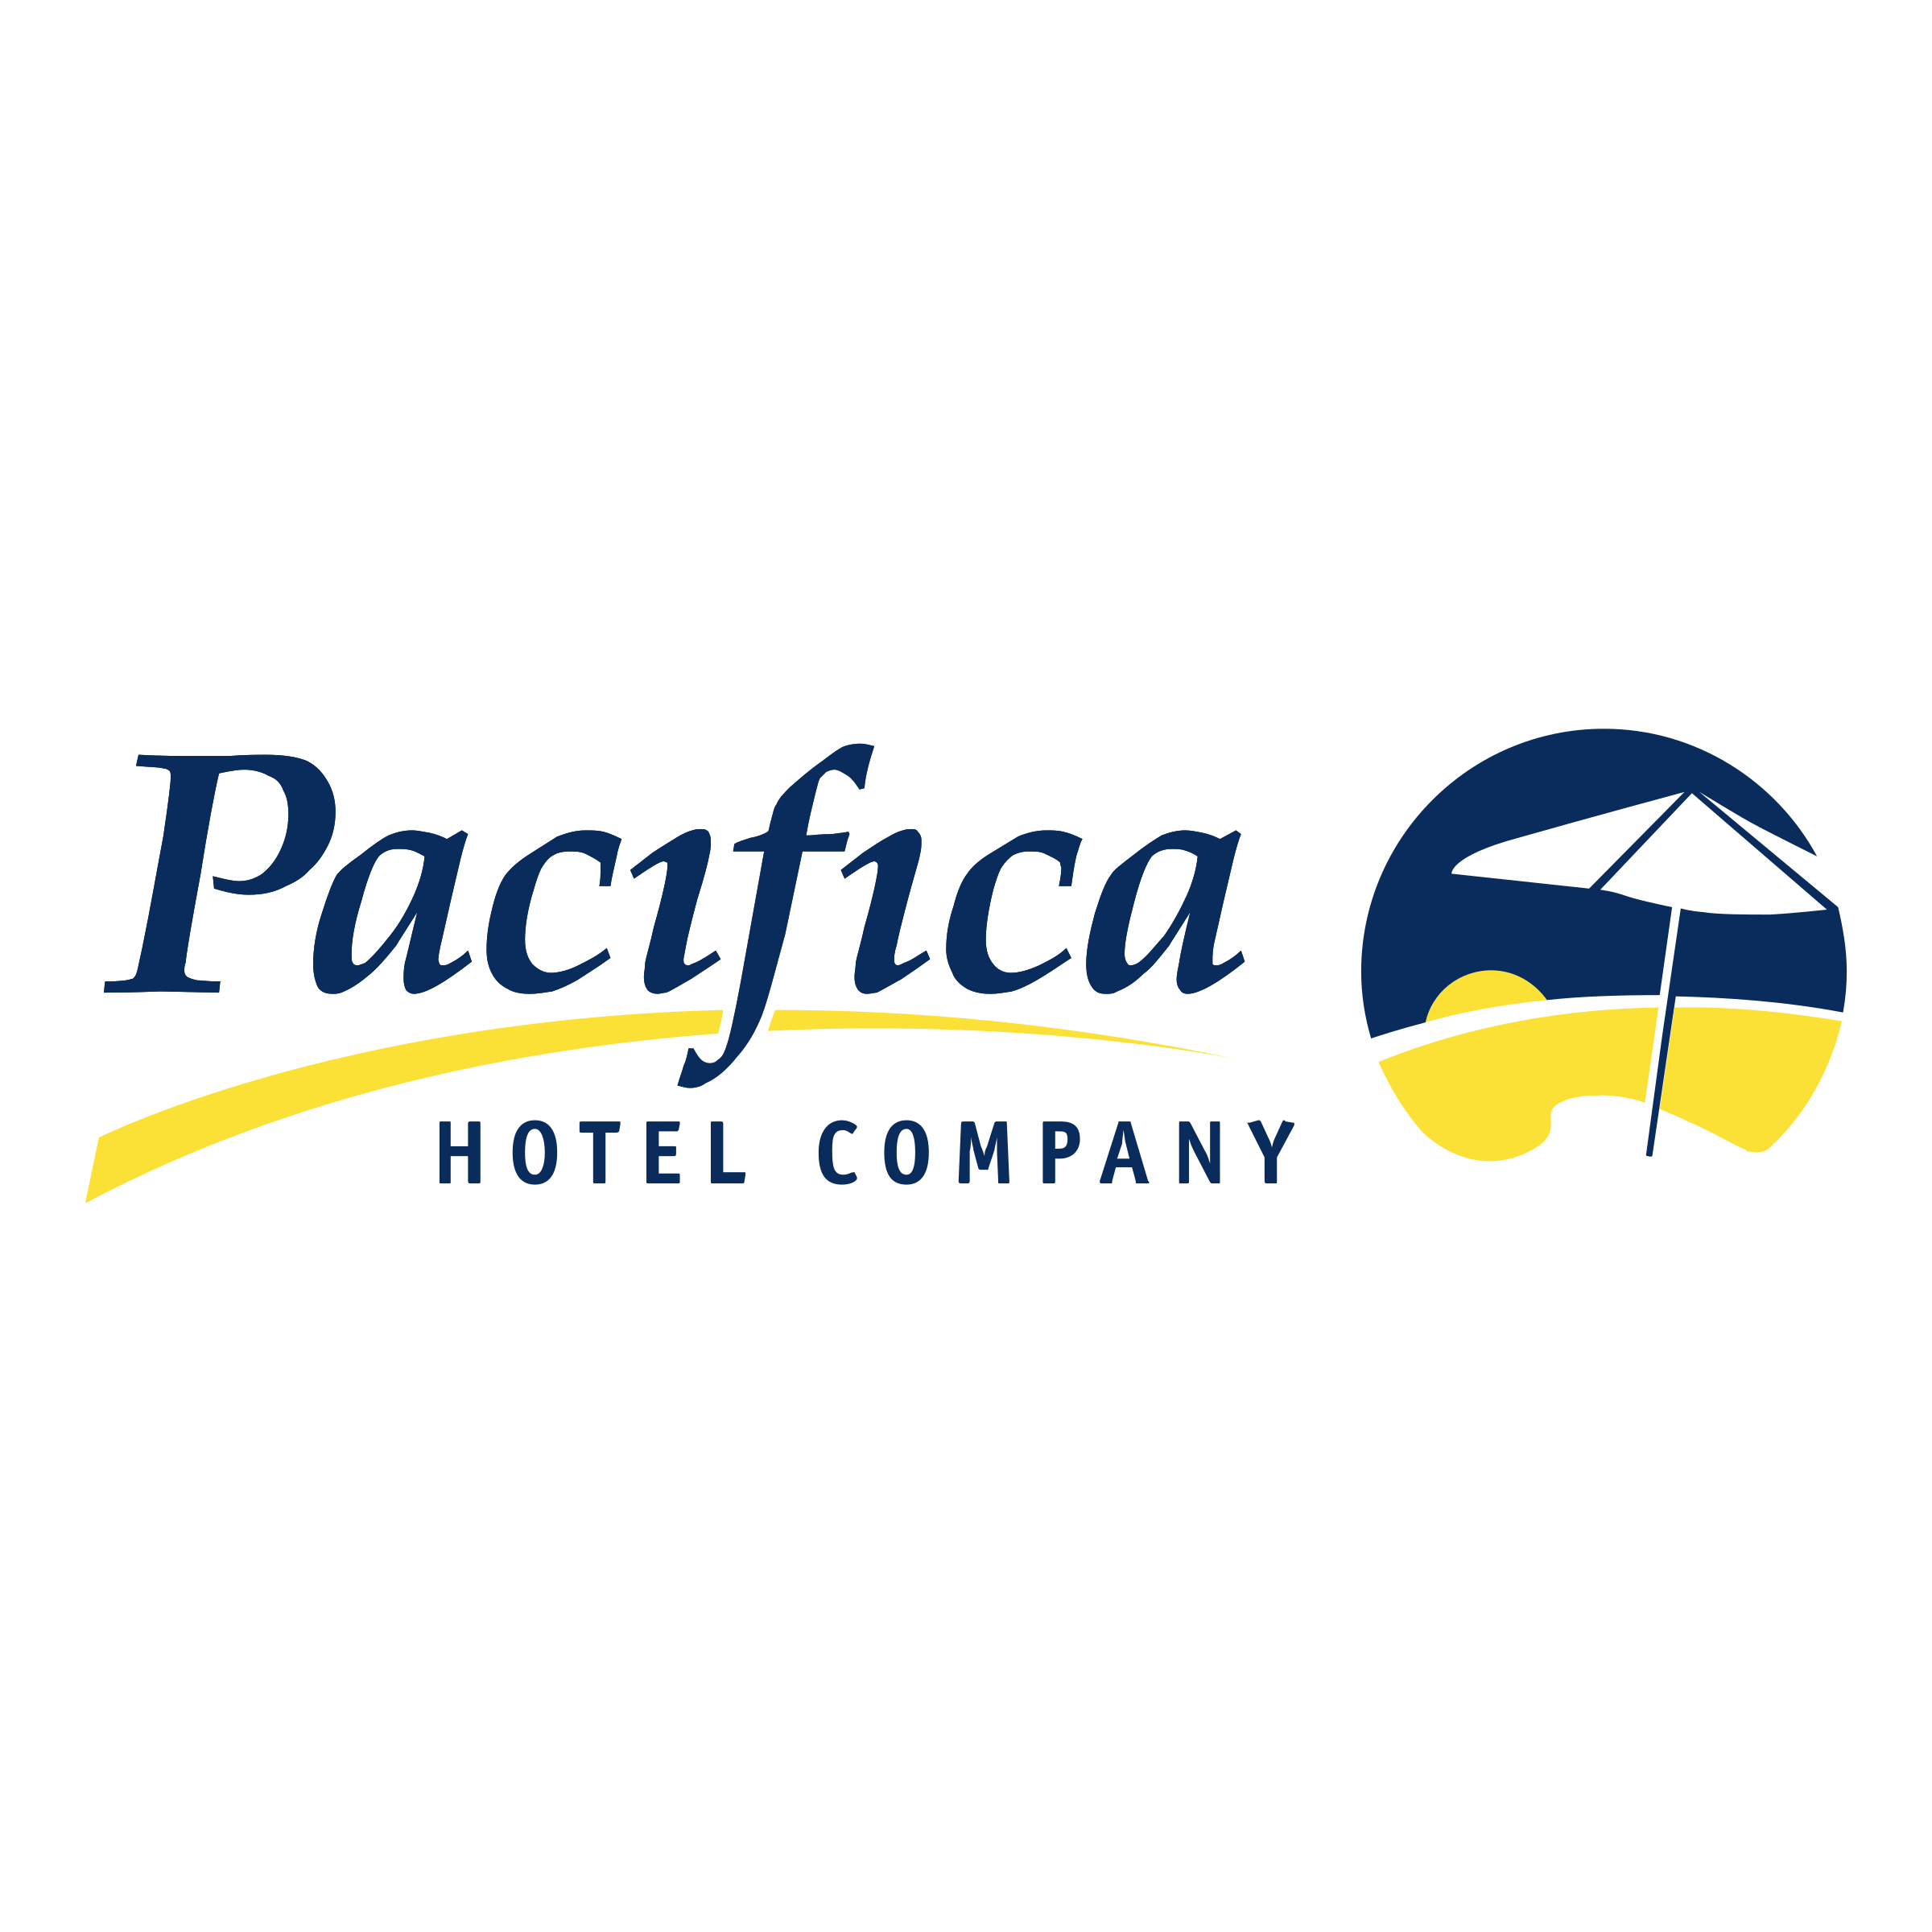 Hotel Company Logo - Pacifica Hotel Company Logo PNG Transparent & SVG Vector - Freebie ...